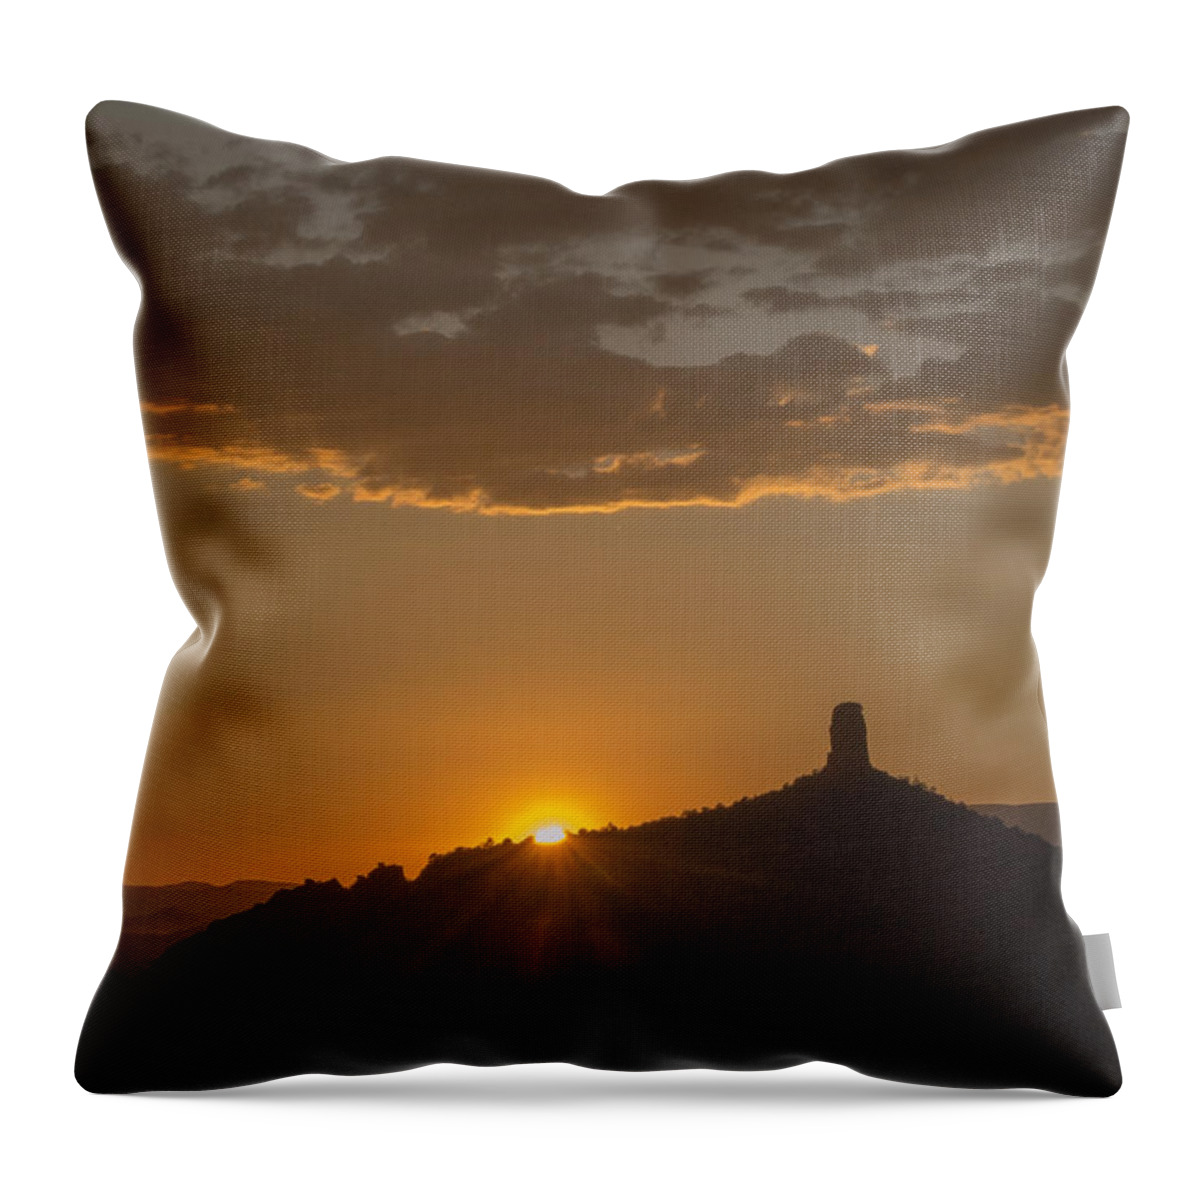 Sunset Throw Pillow featuring the photograph Chimney Rock Sunset by Laura Pratt